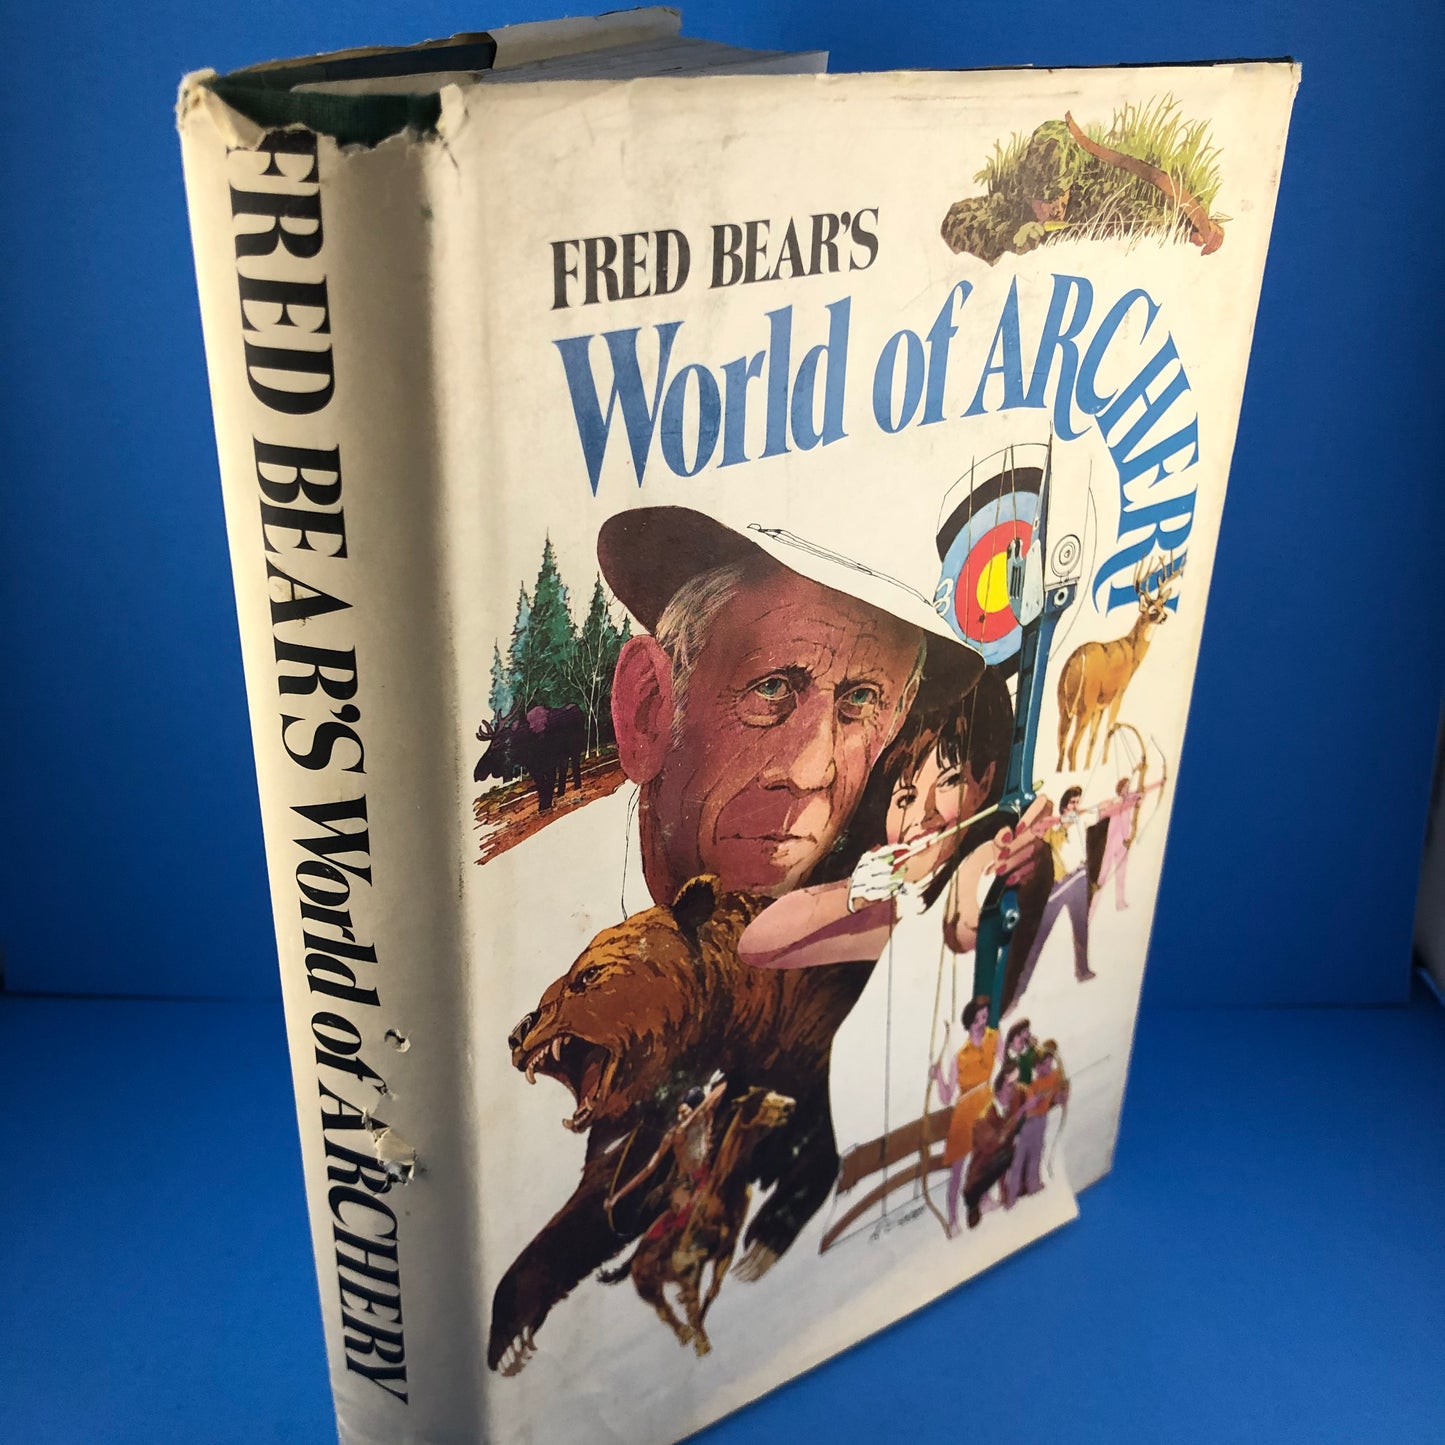 Fred Bear's World of Archery